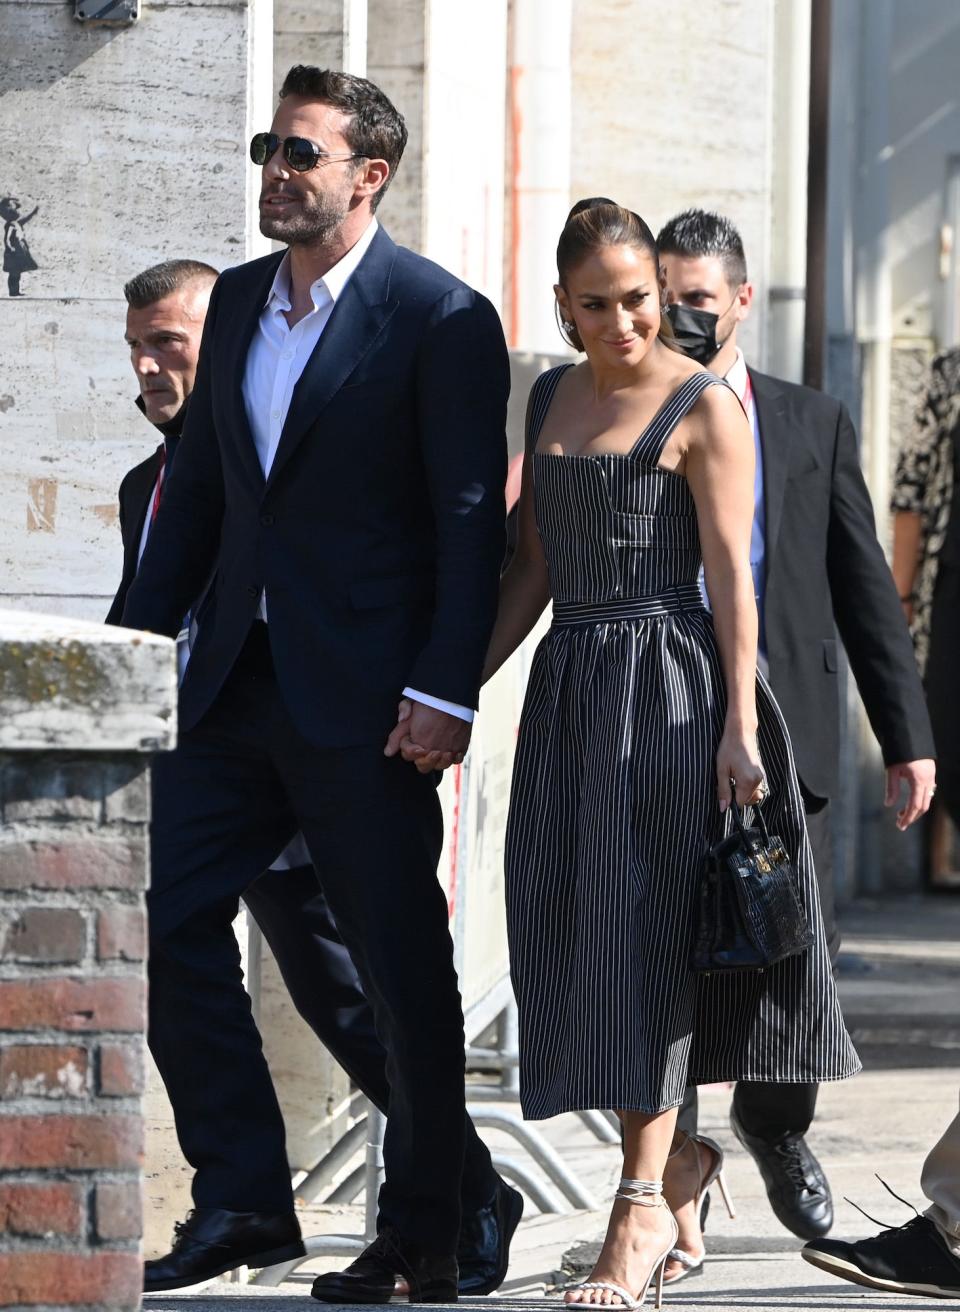 Ben Affleck and Jennifer Lopez at the 2021 Venice Film Festival.